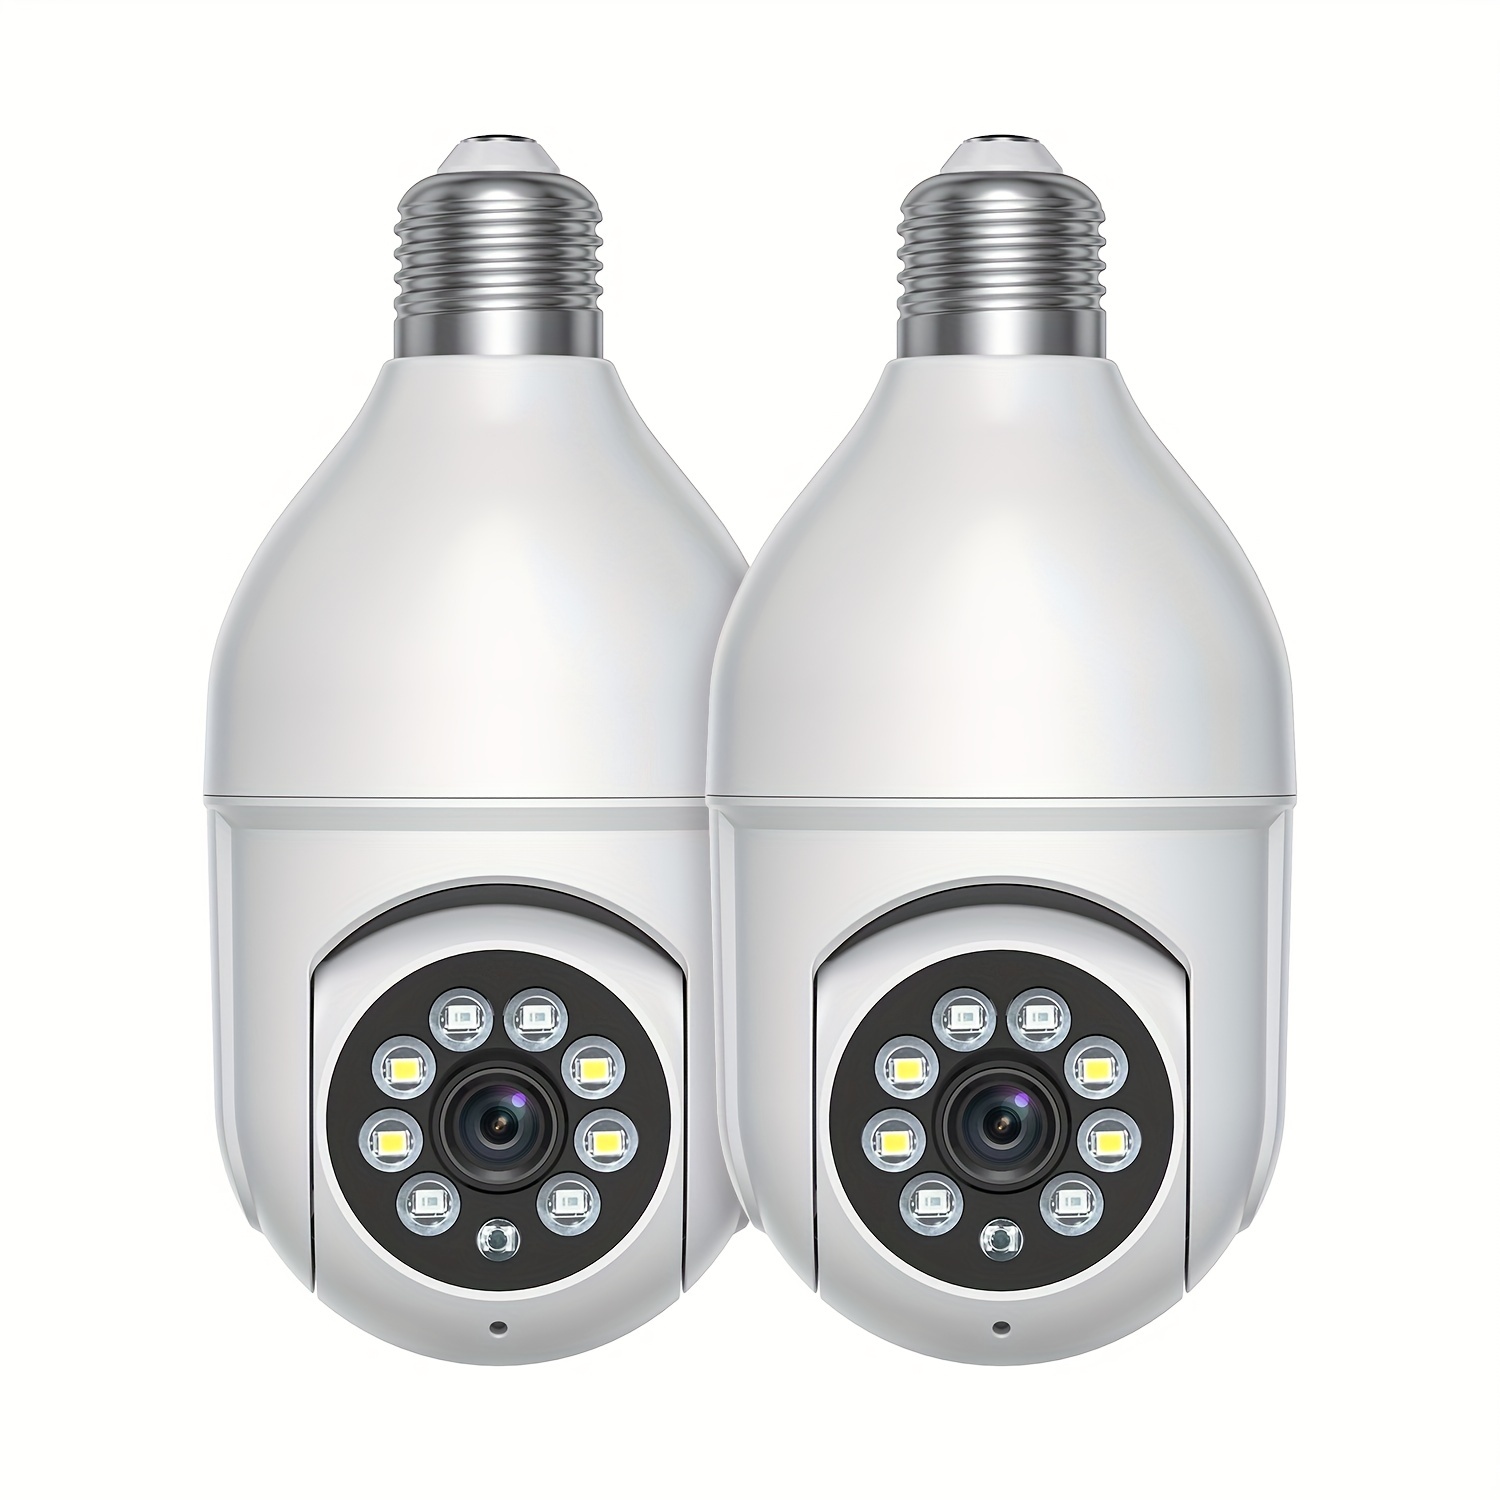 1080p Light Bulb Wireless Security Camera 355° Panoramic - Temu